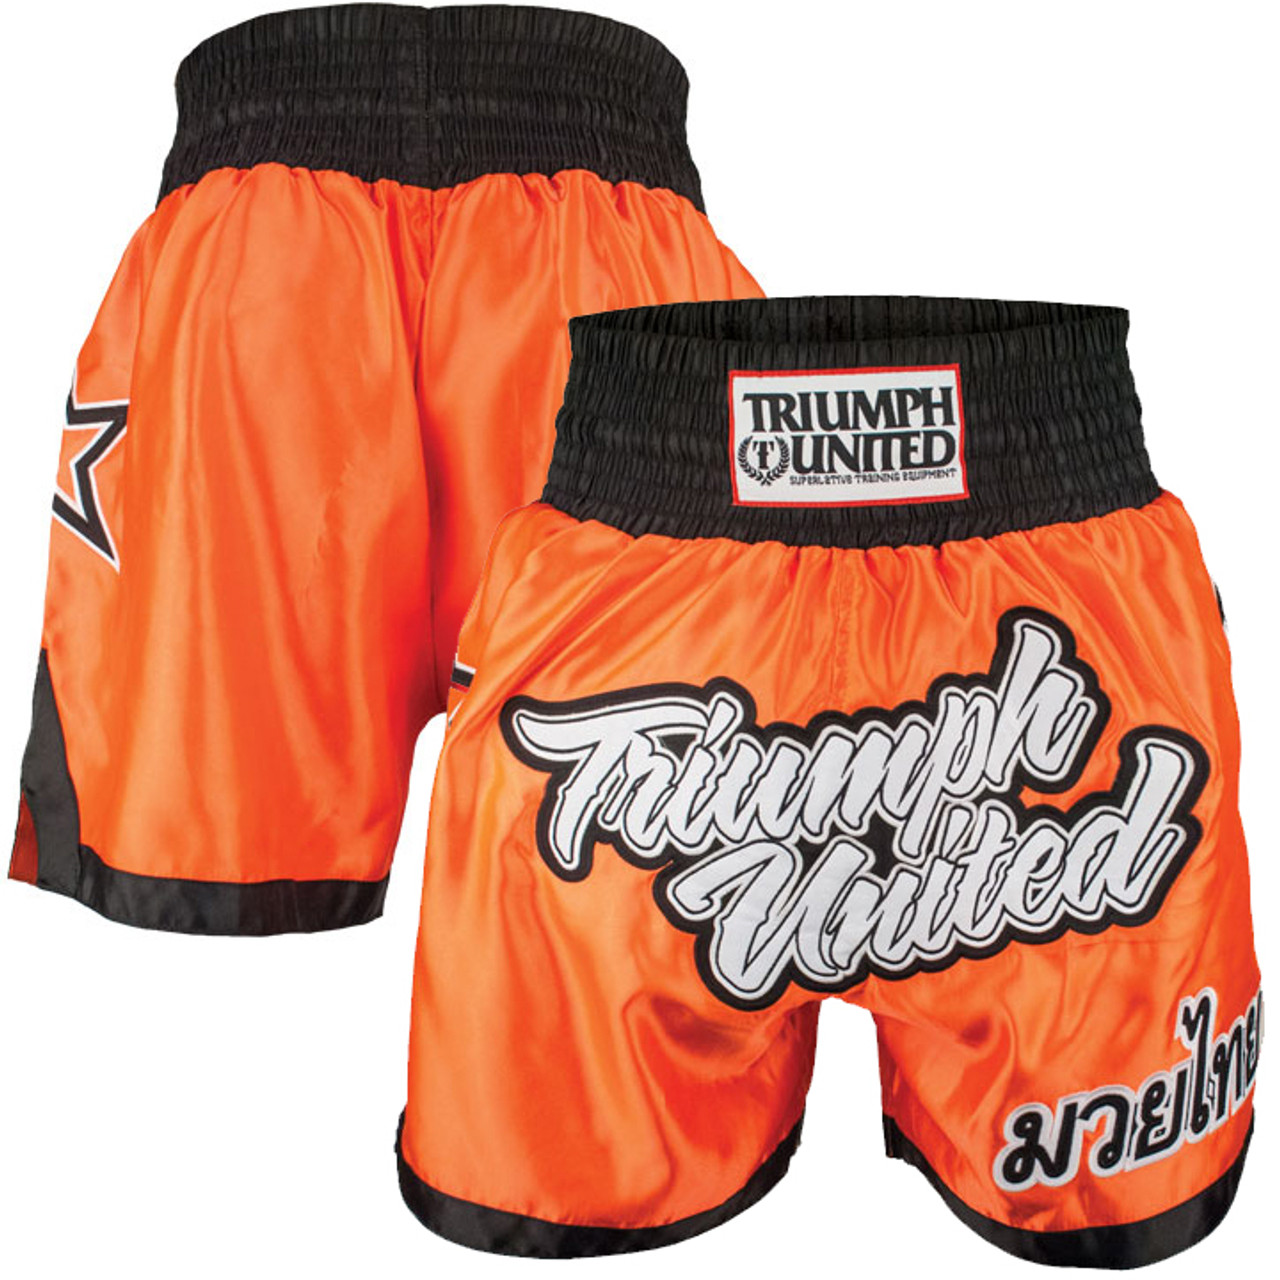 Triumph Shorts Thai Fighter United Muay